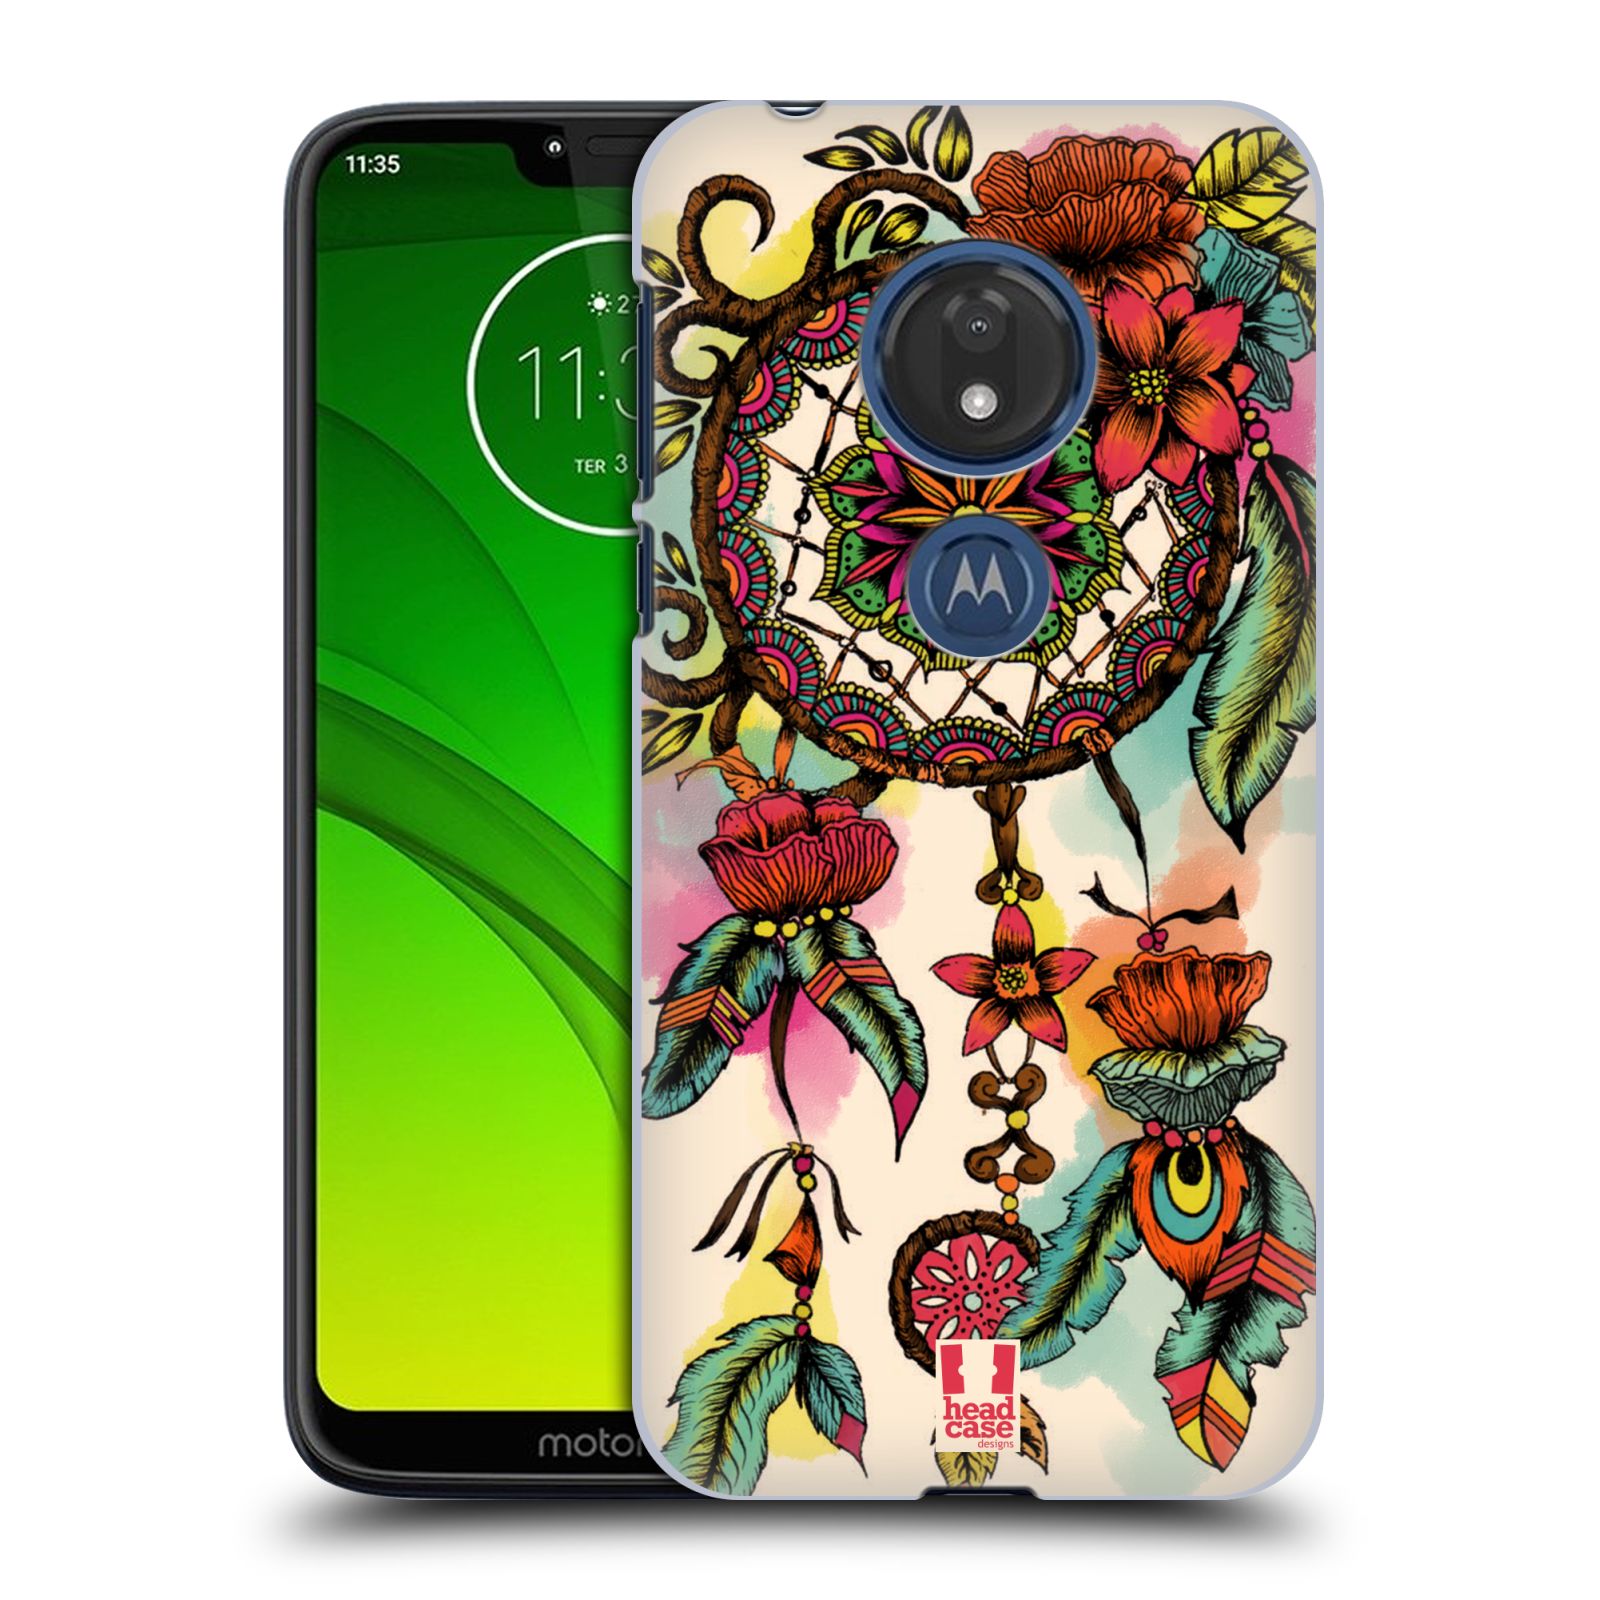 Pouzdro na mobil Motorola Moto G7 Play vzor Květy lapač snů FLORID